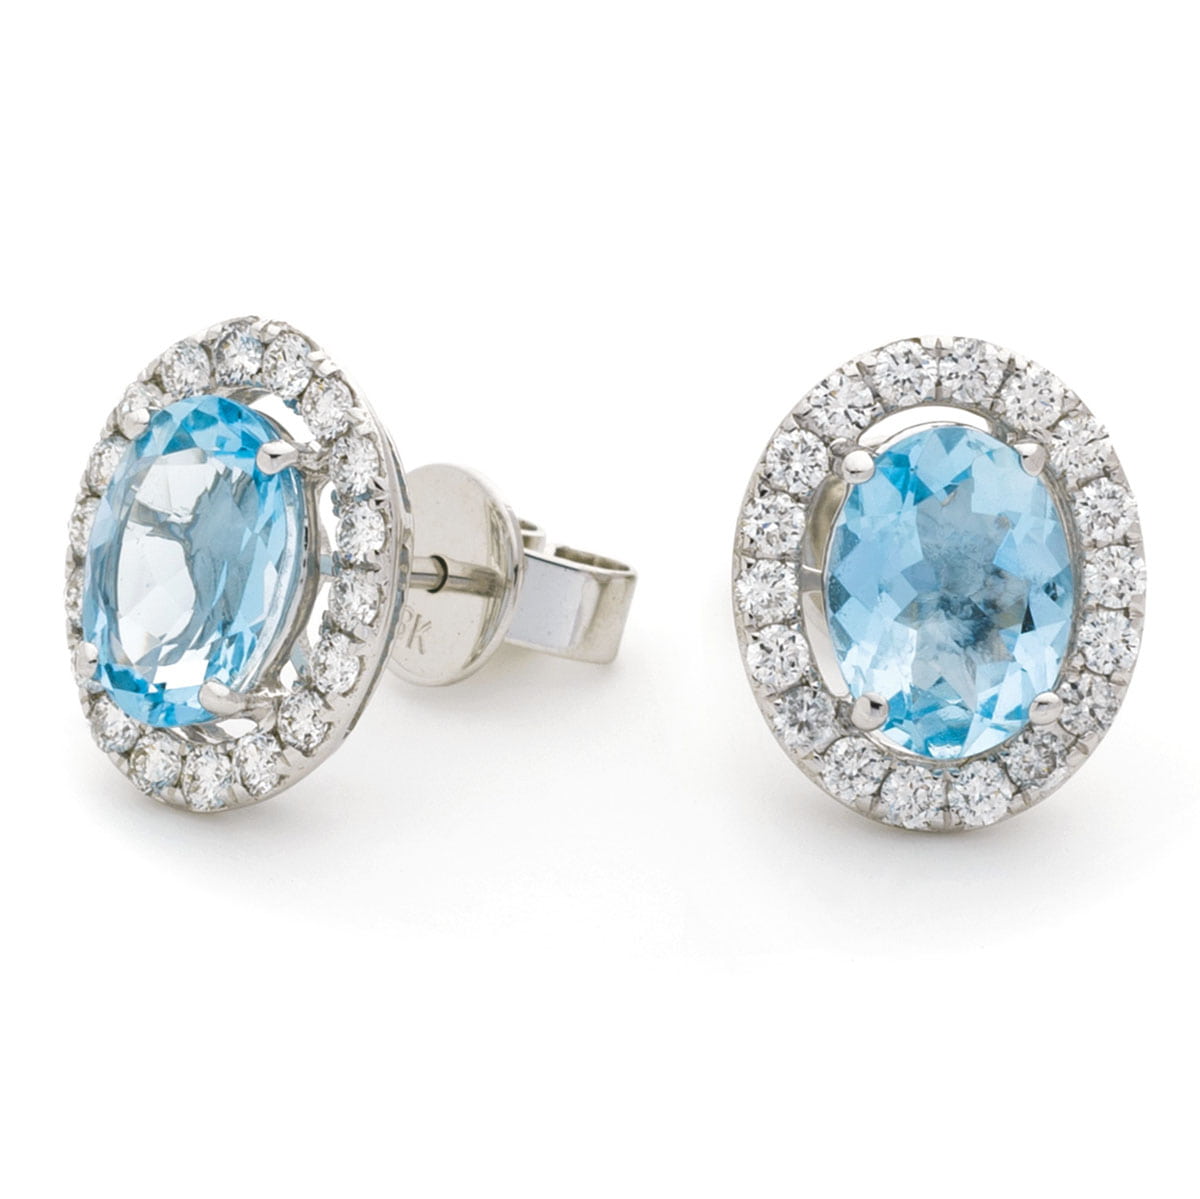 Oval Cut Aquamarine Stud Earrings With Diamond Halo | Earrings | Jenny ...